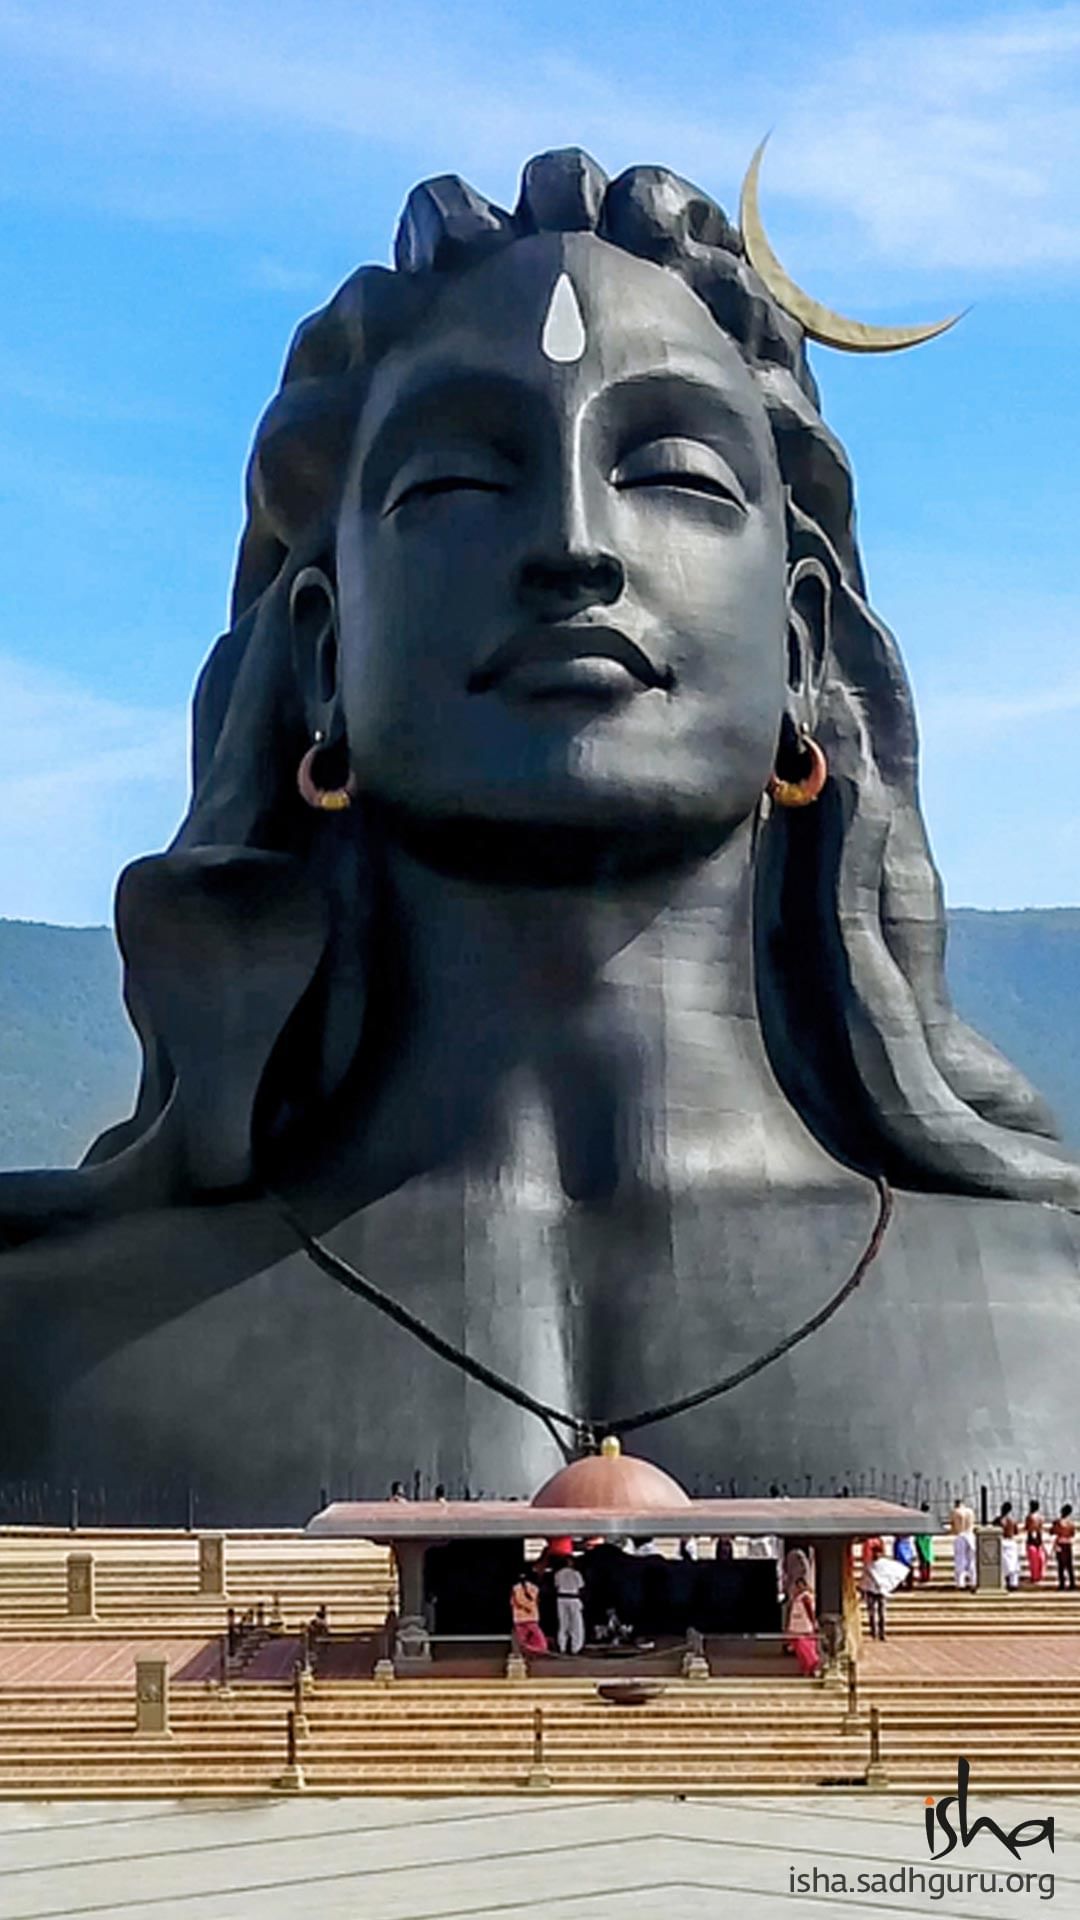 Mahashivratri & Shiva Downloads - Wallpapers, Songs, Videos